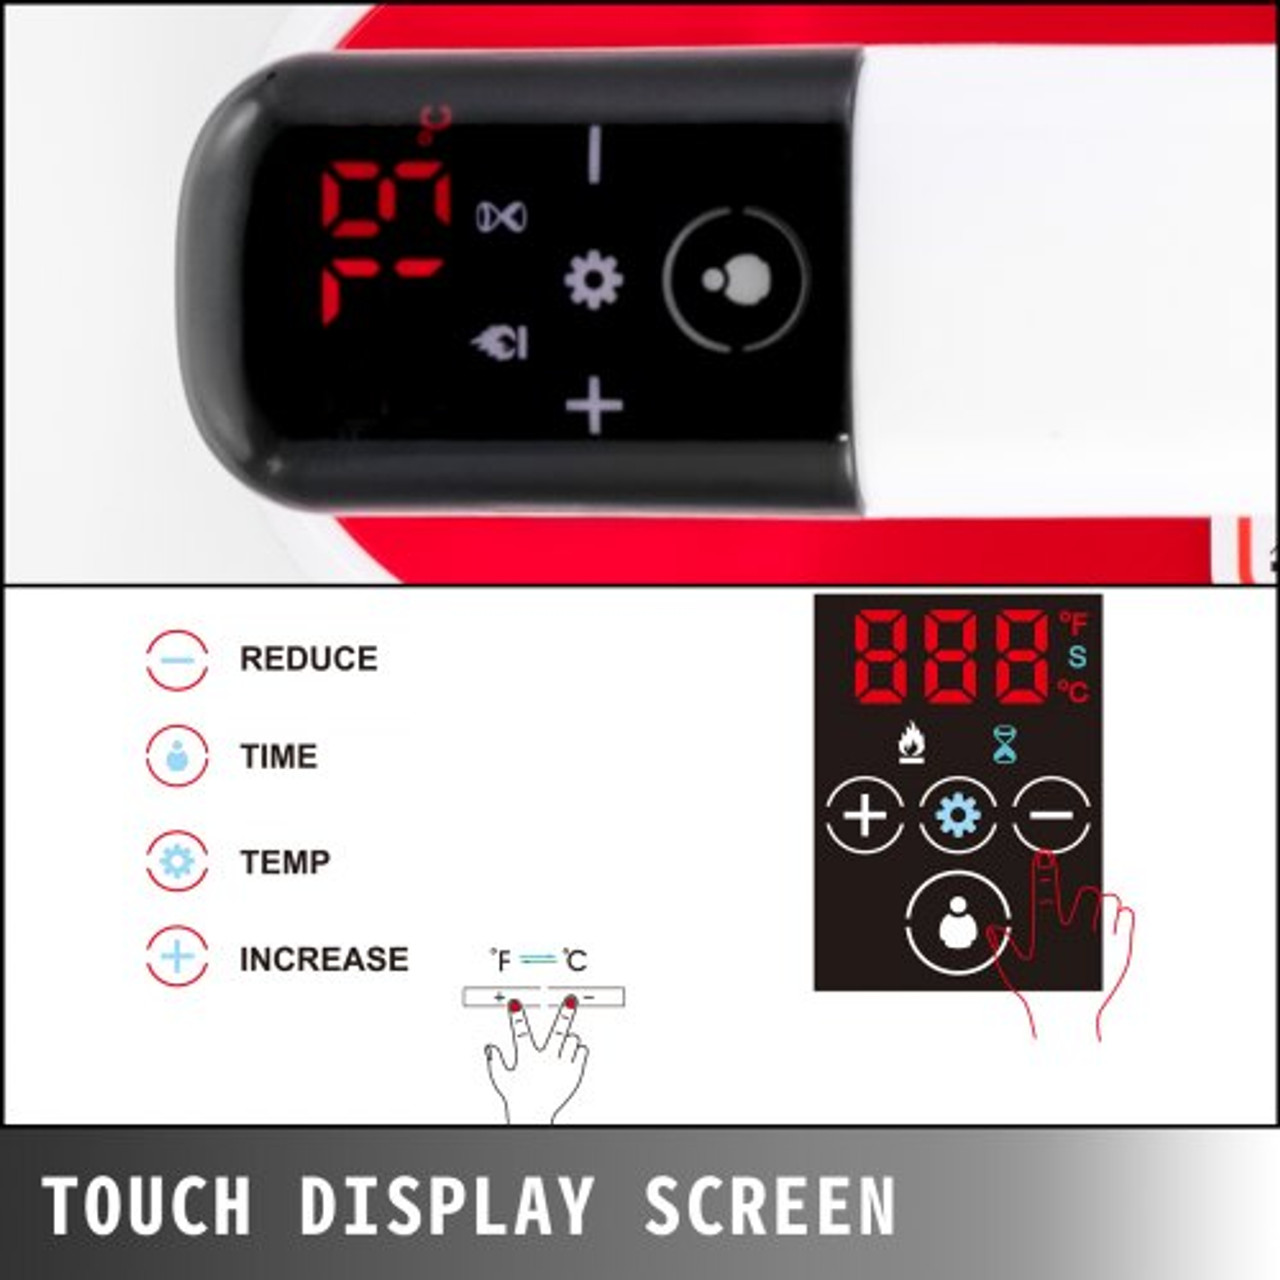 VEVOR Heat Press 7 x 8 Portable Machine Easy Mini Press T-shirts Touch Screen DIY